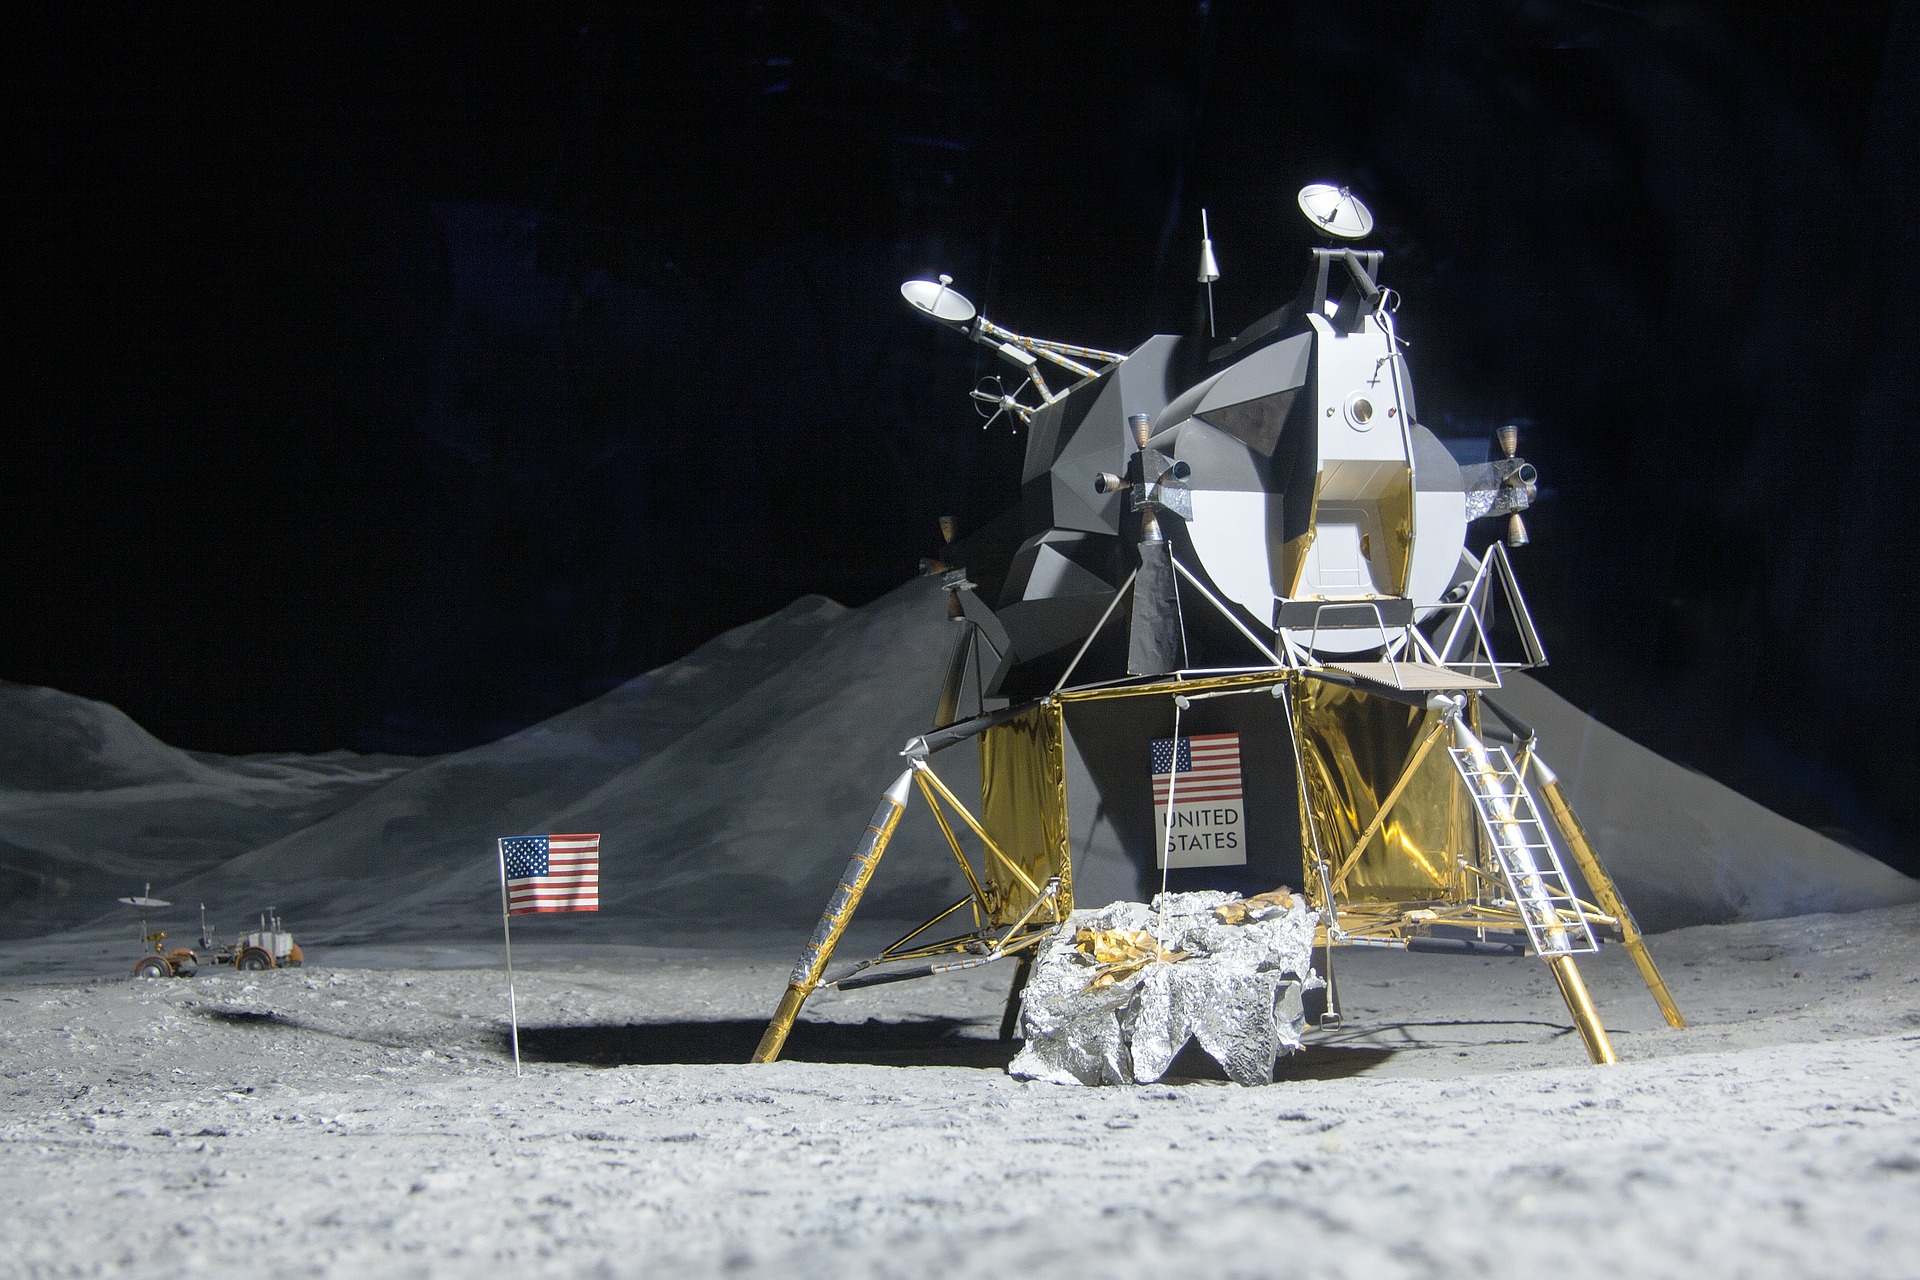 https://pixabay.com/en/moon-landing-lunar-module-eagle-193761/